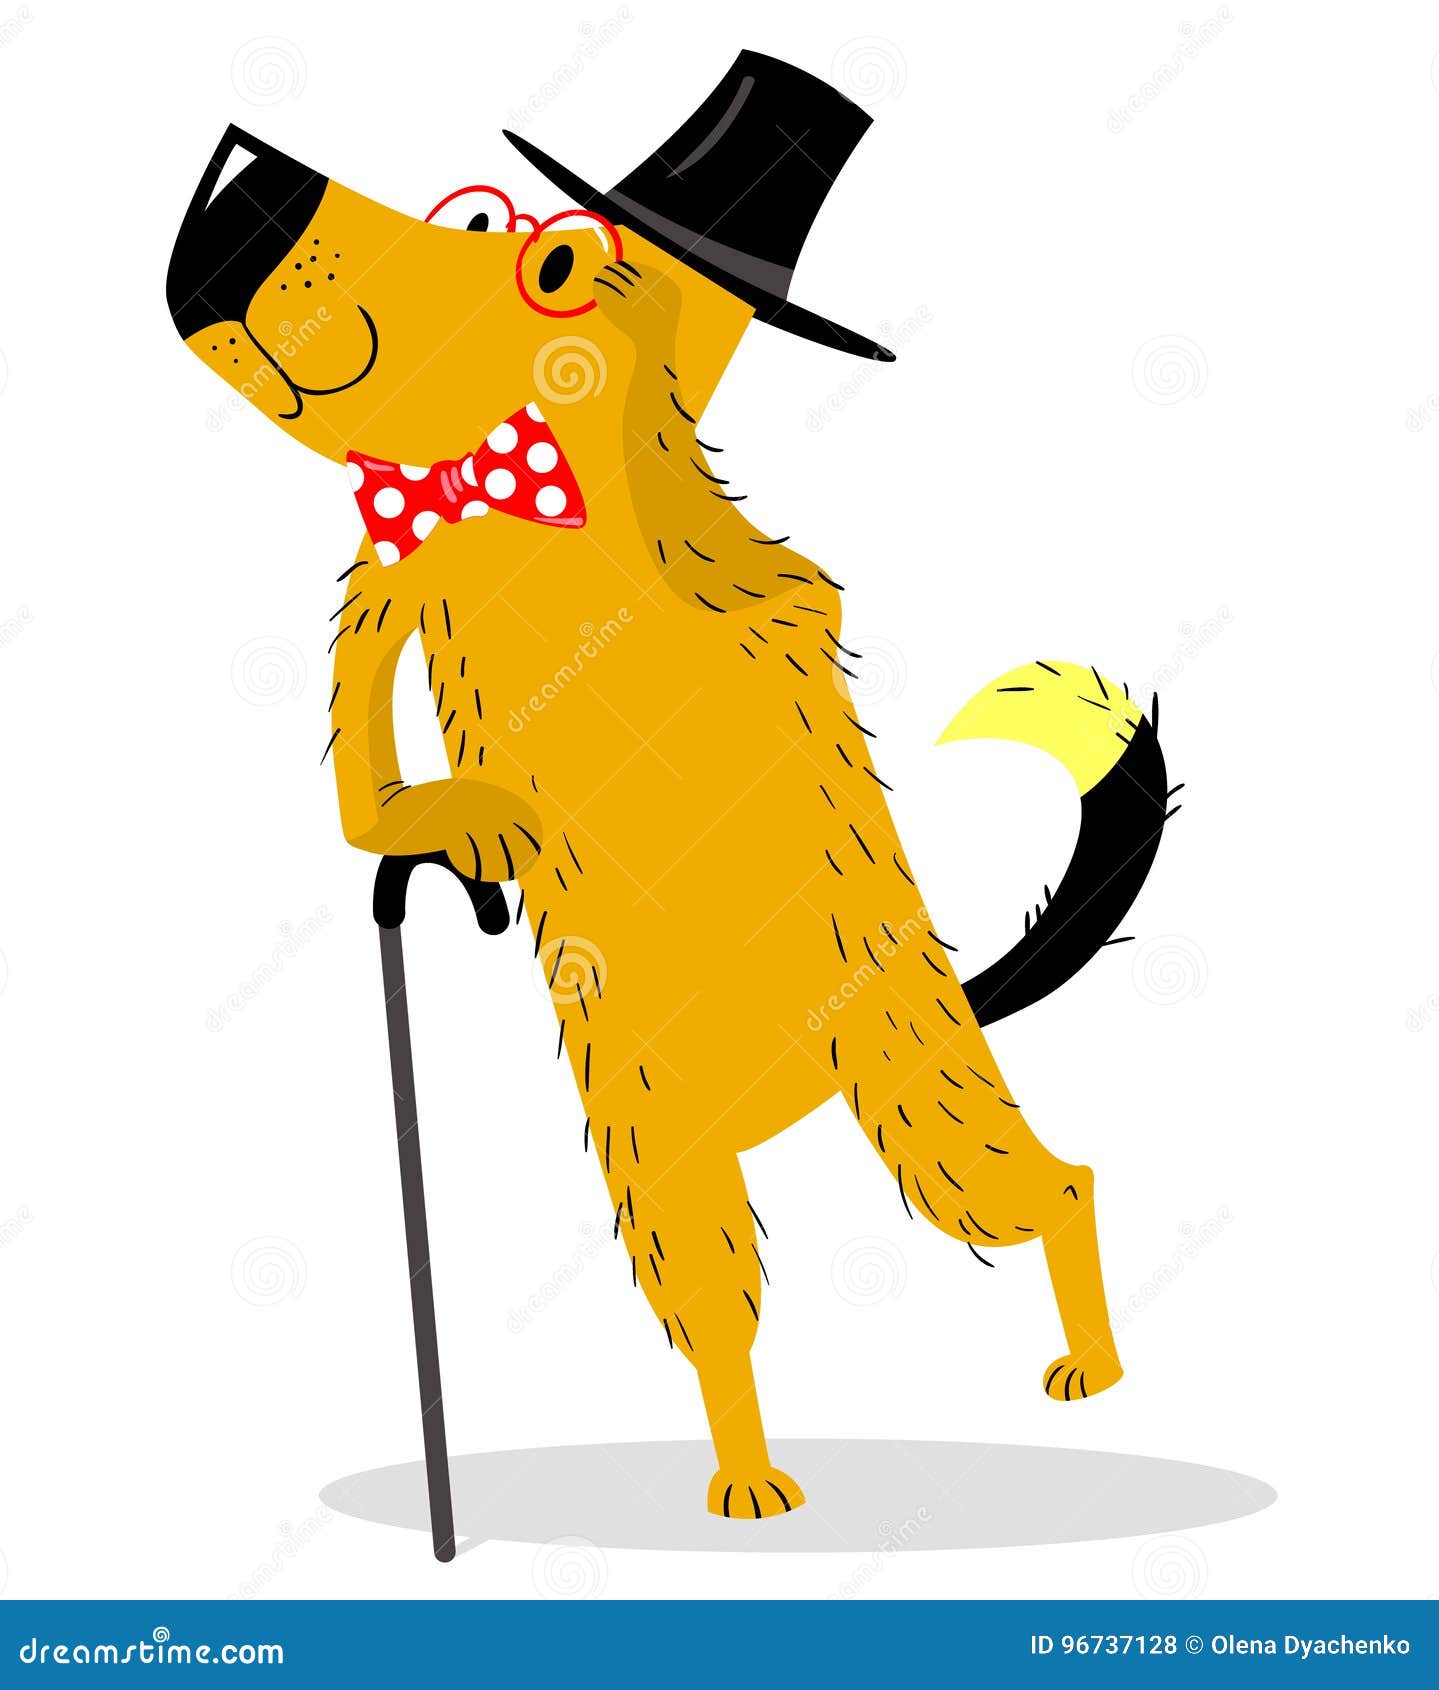 a dog dressed as a gentleman ÃÂ pince-nez and walking stick. vintage suit and accessories.